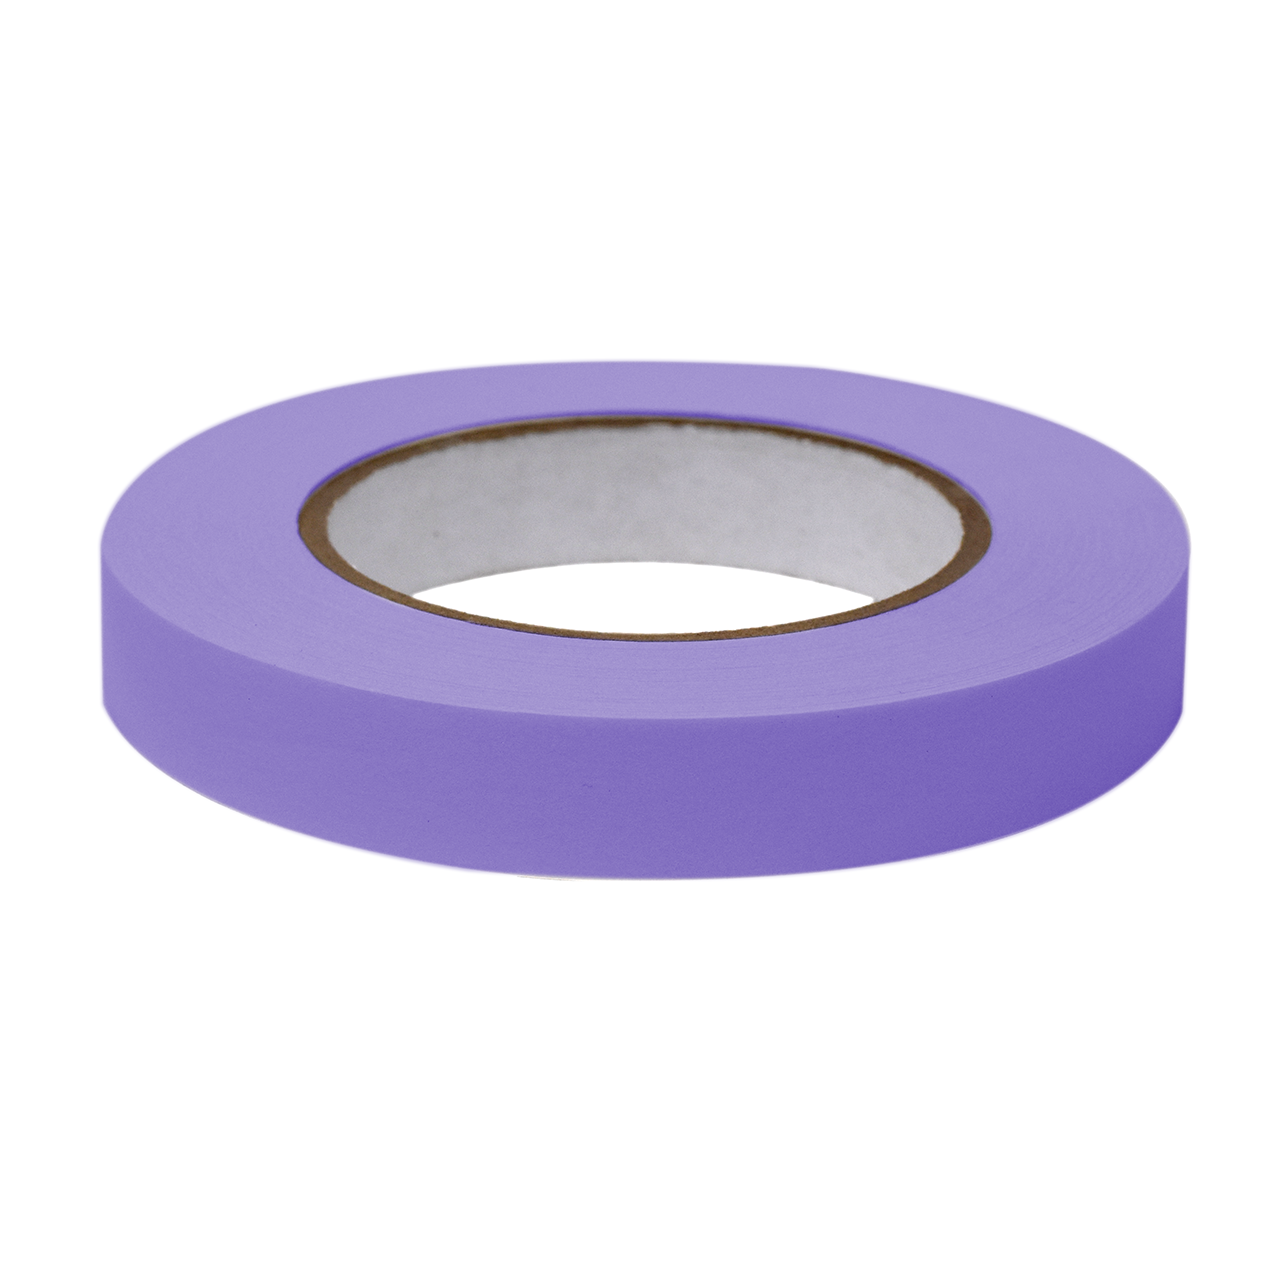 Globe Scientific Labeling Tape, 3/4" x 60yd per Roll, 4 Rolls/Case, Lavender  